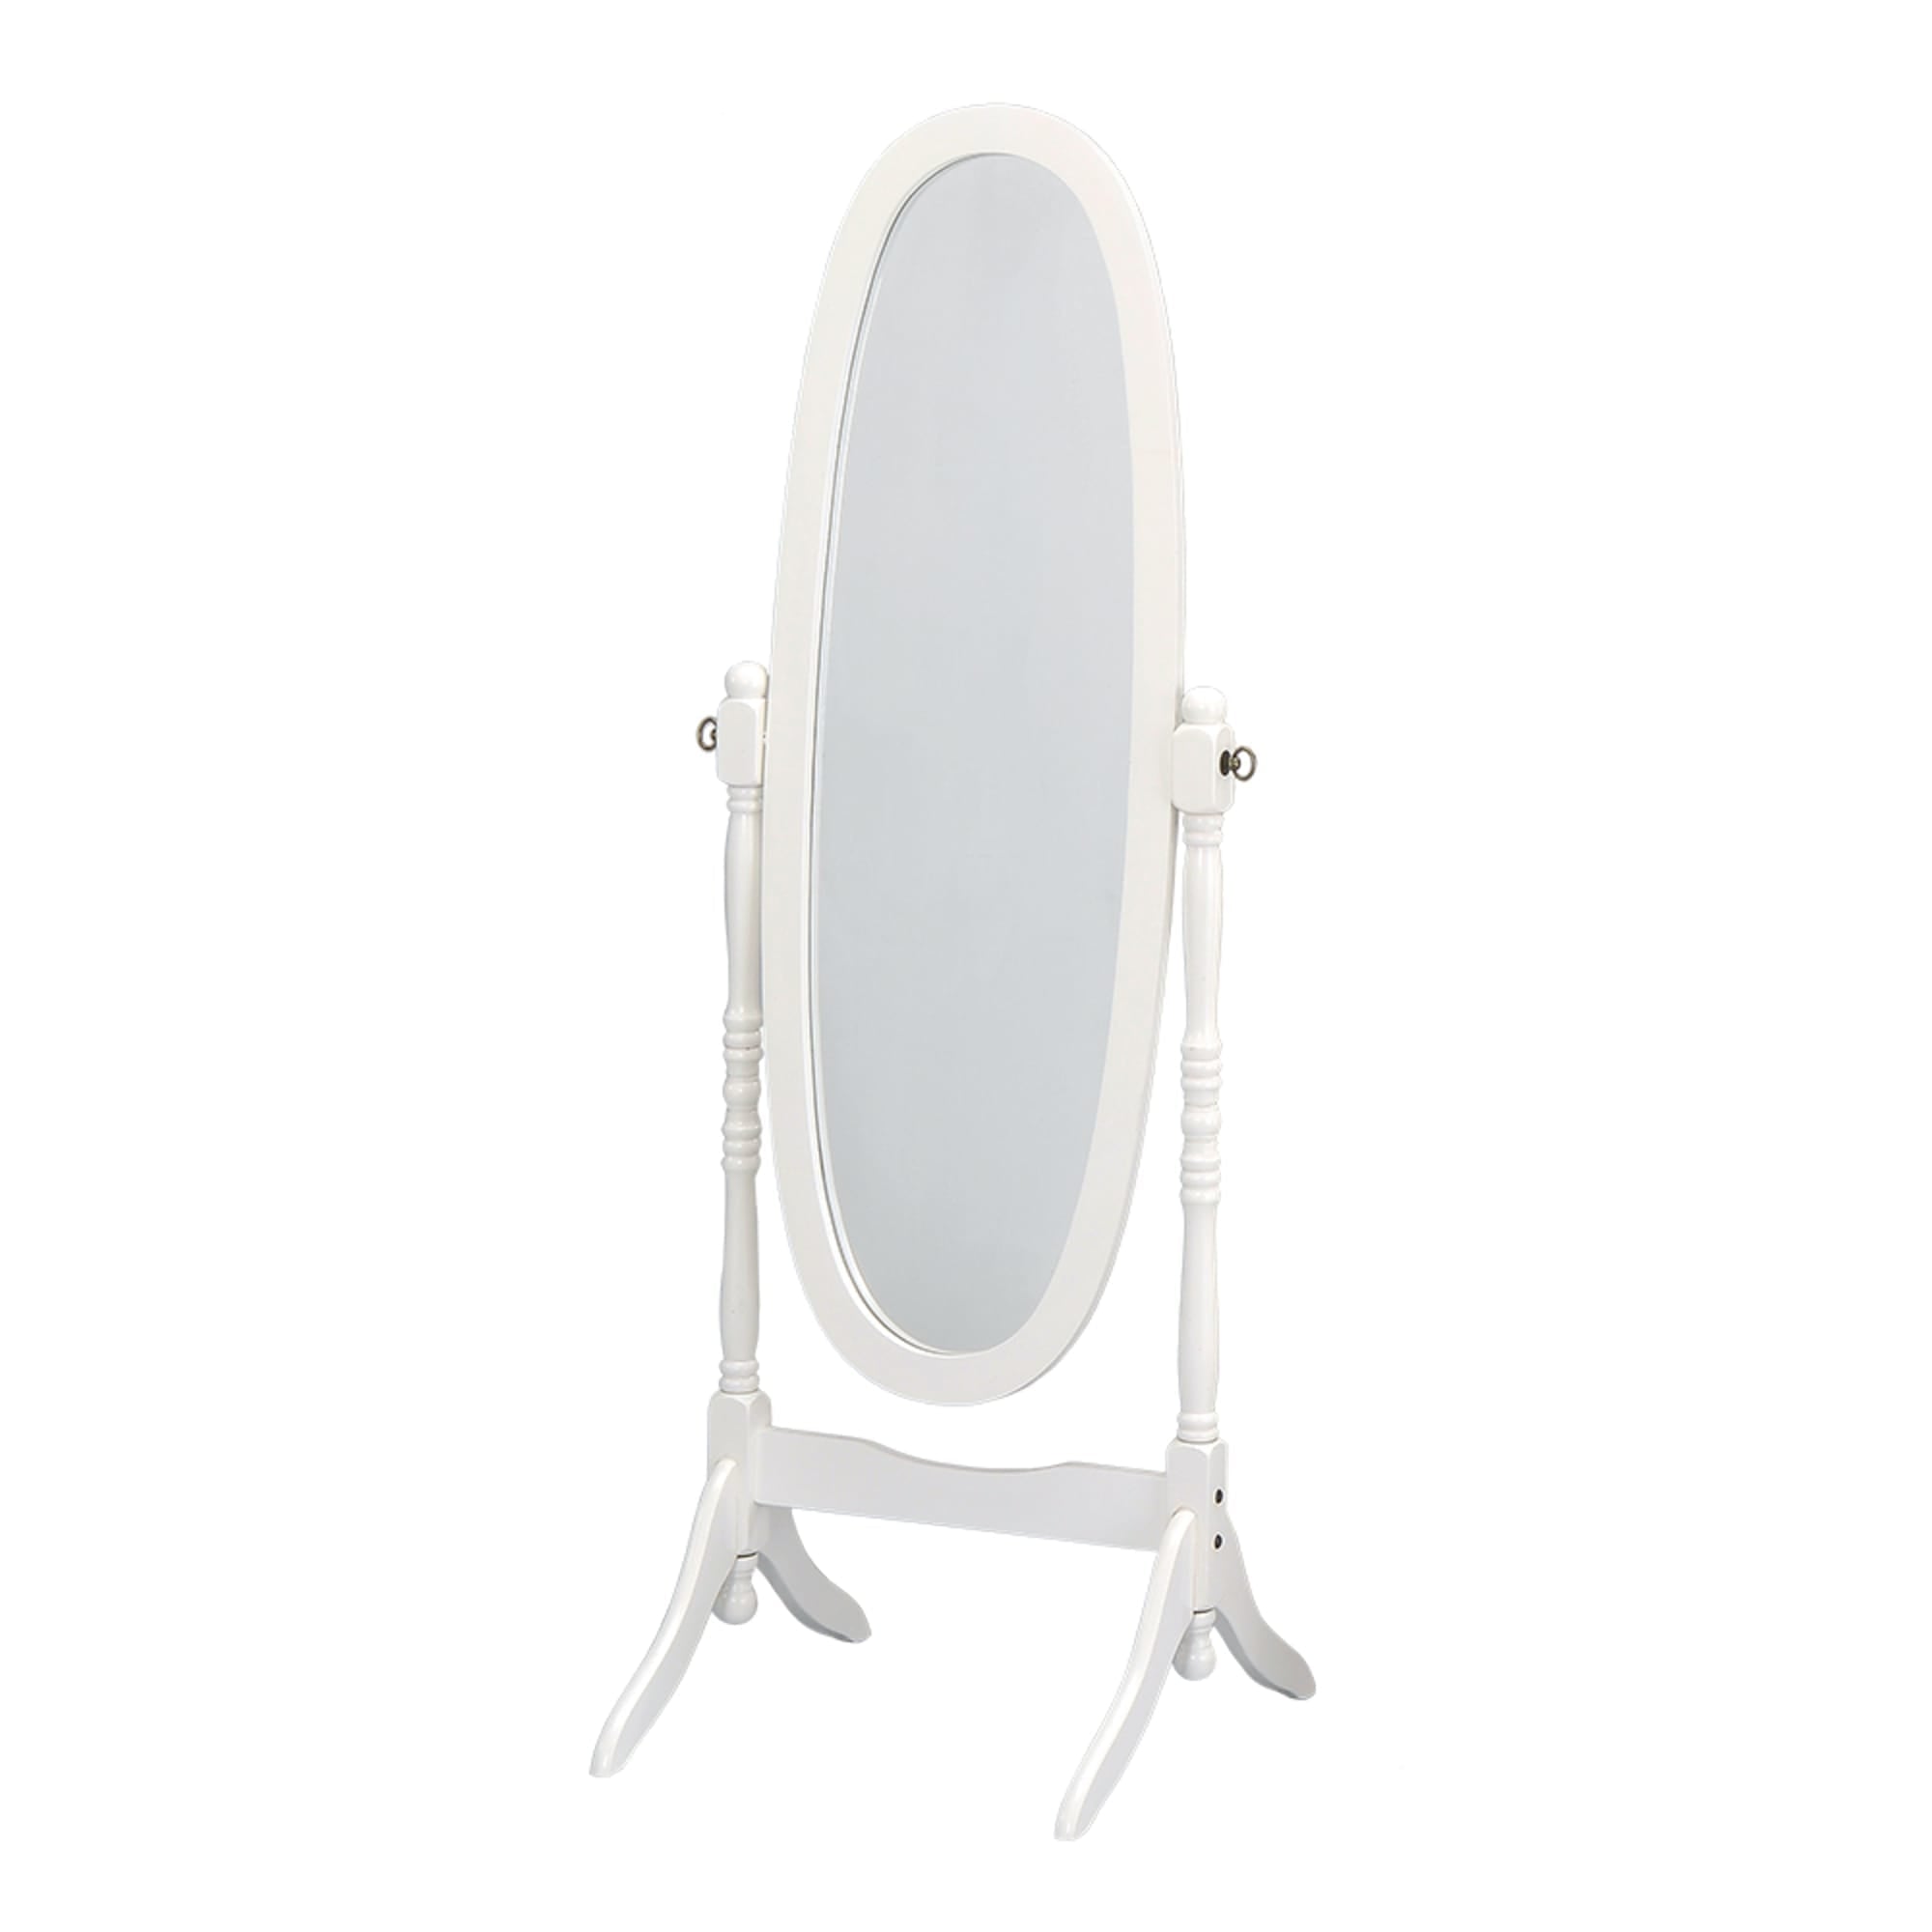 Home Basics Freestanding Oval Mirror, White $60.00 EACH, CASE PACK OF 1